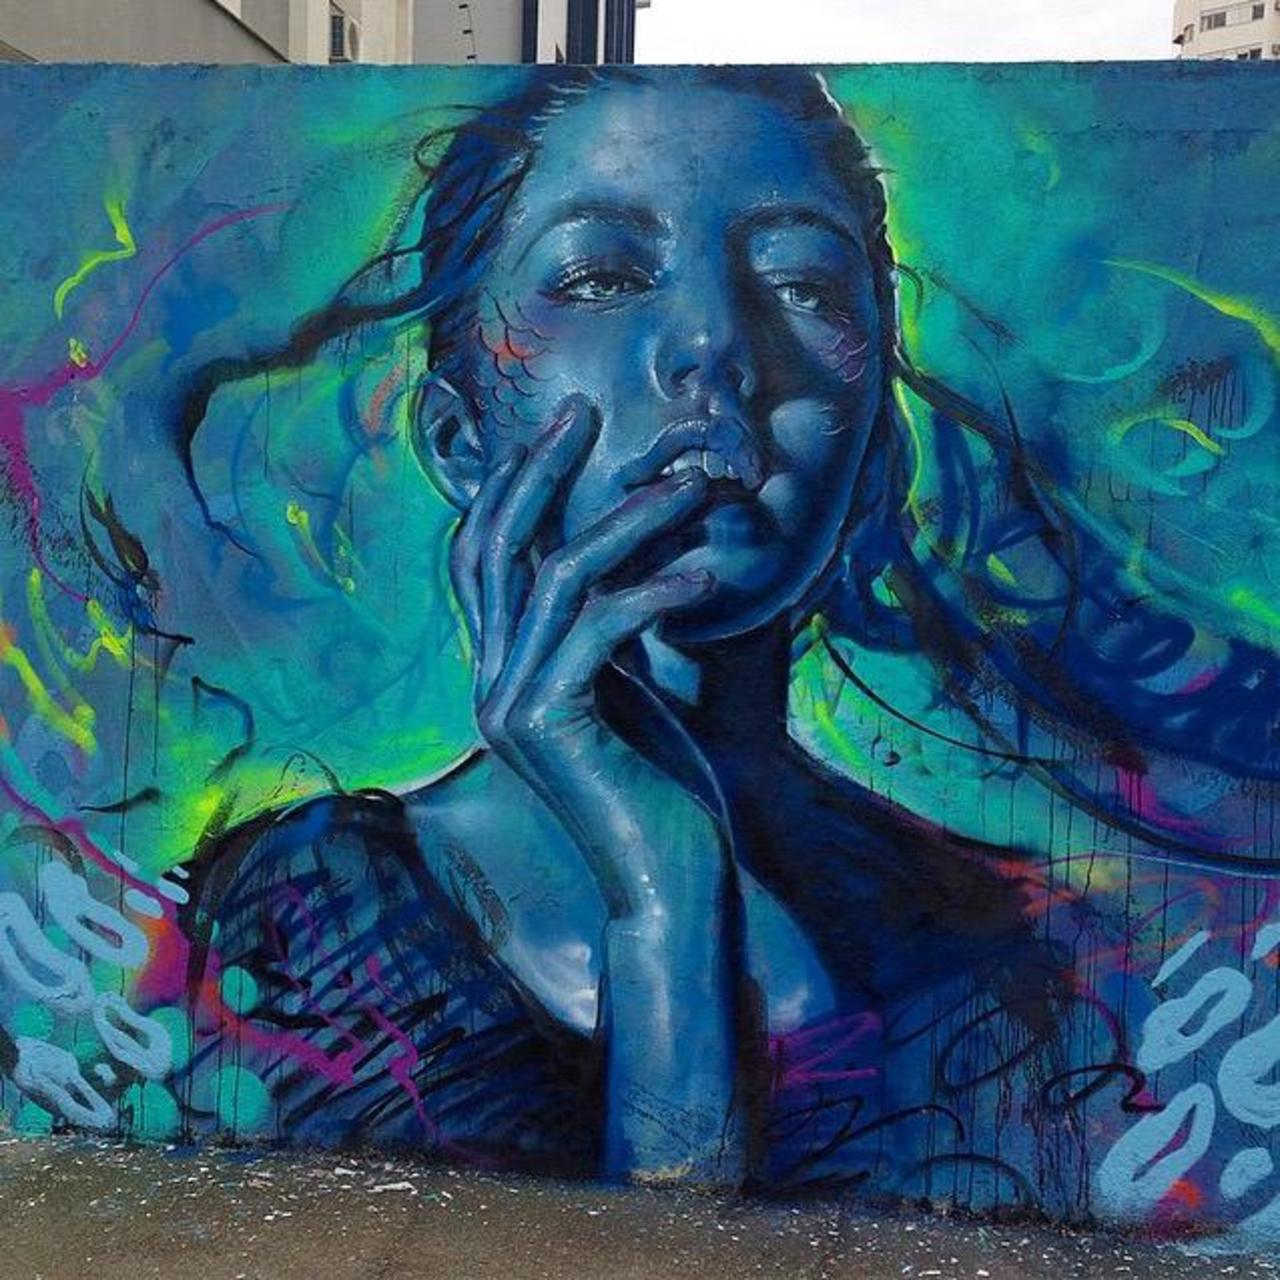 RT belilac "RT belilac "Thiago Valdi new Street Art piece titled 'Day Dreamer'

#art #mural #graffiti #streetart http://t.co/Lc79yUt4oe""